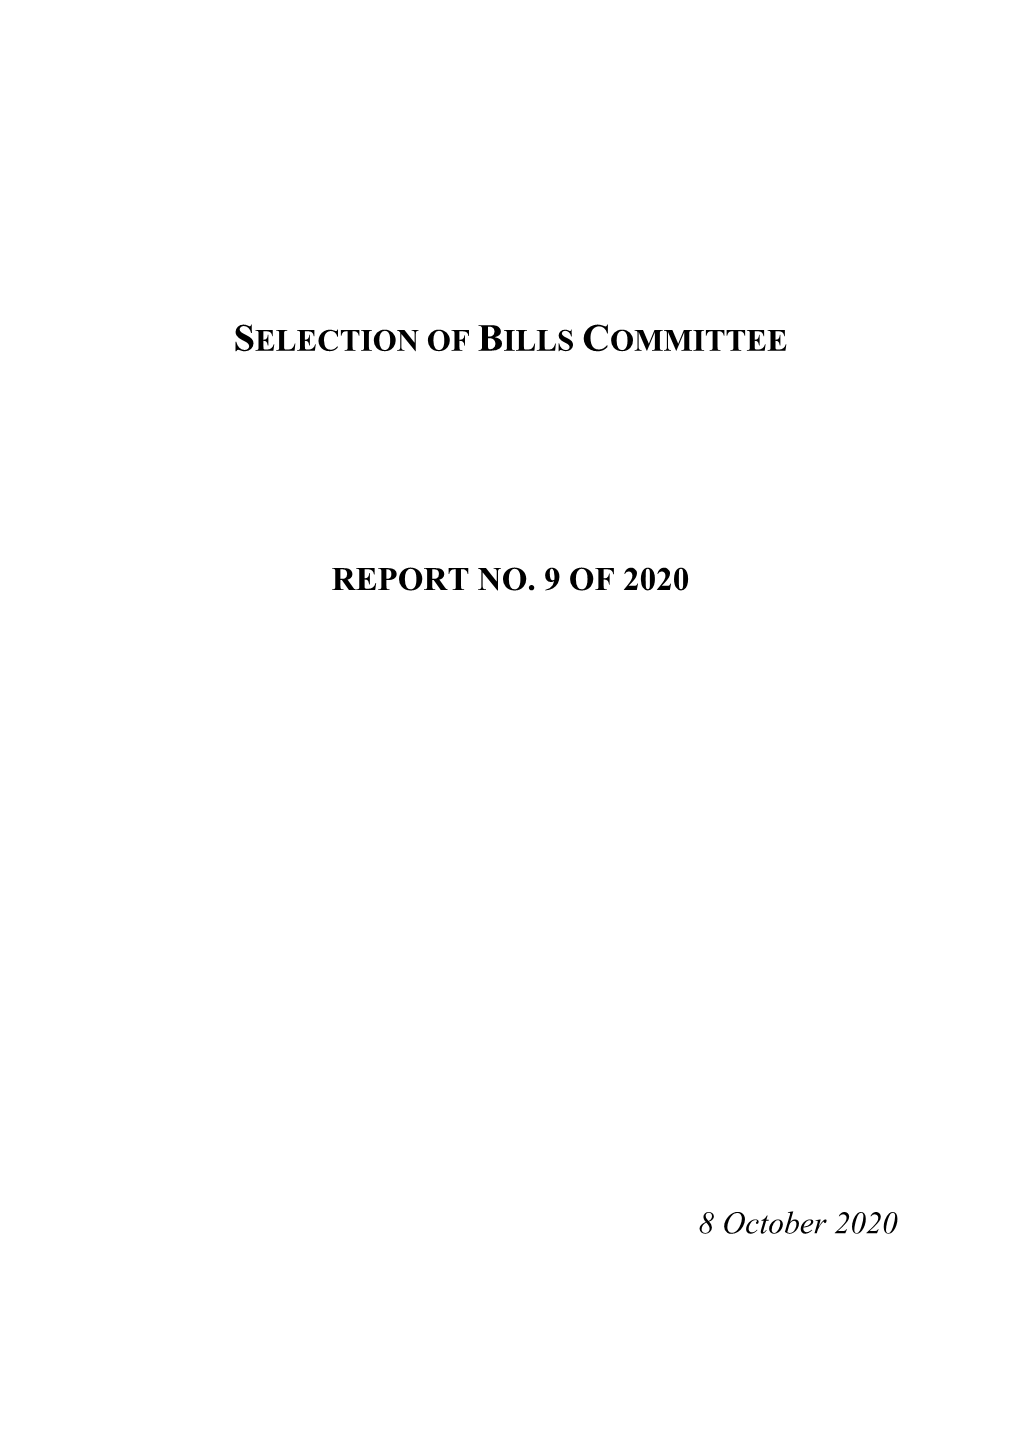 Report No. 9 of 2020